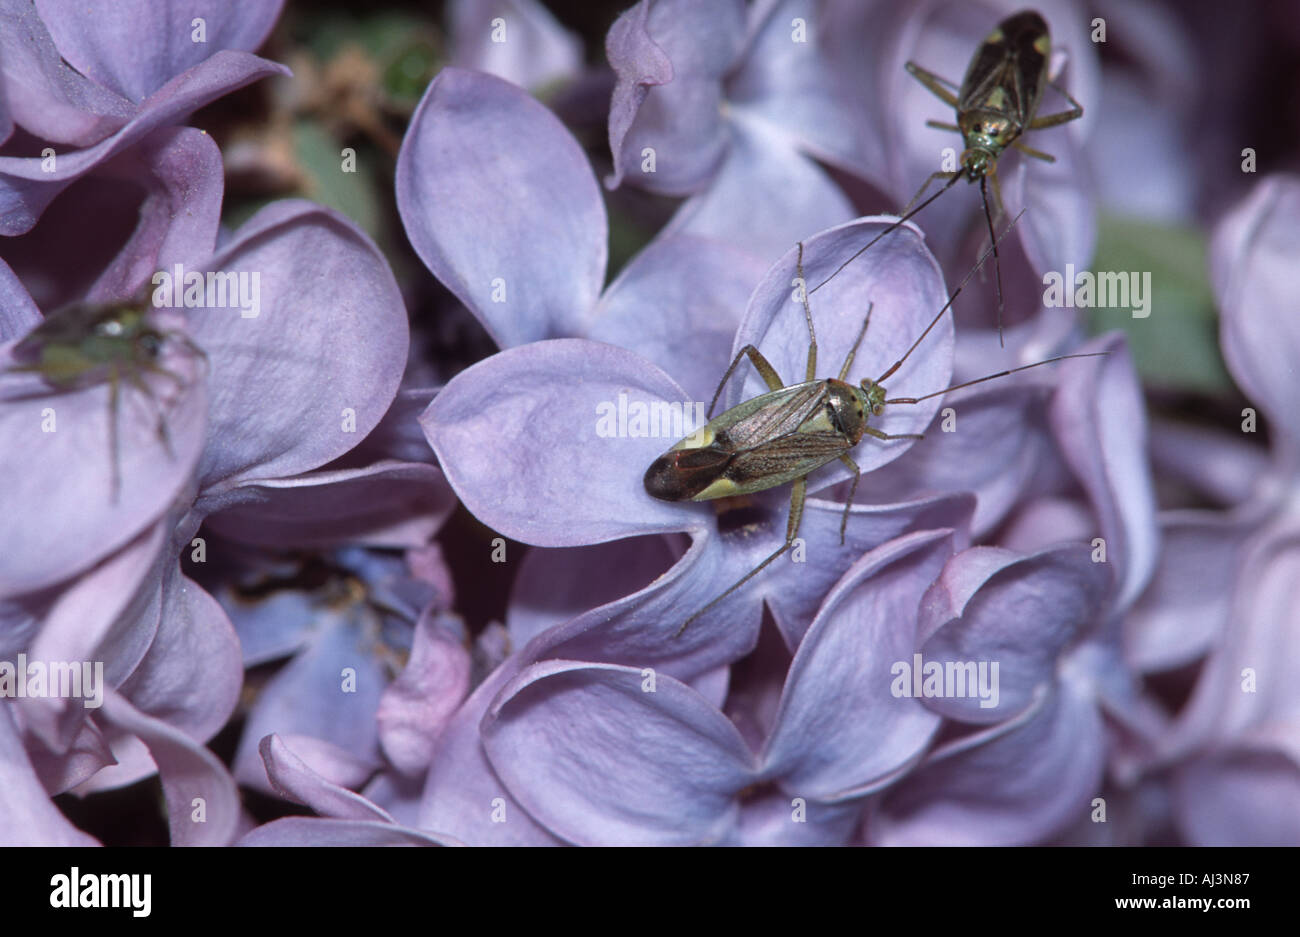 Flower bugs (Heteroptera: Miridae) on Lilac inflorescence Stock Photo